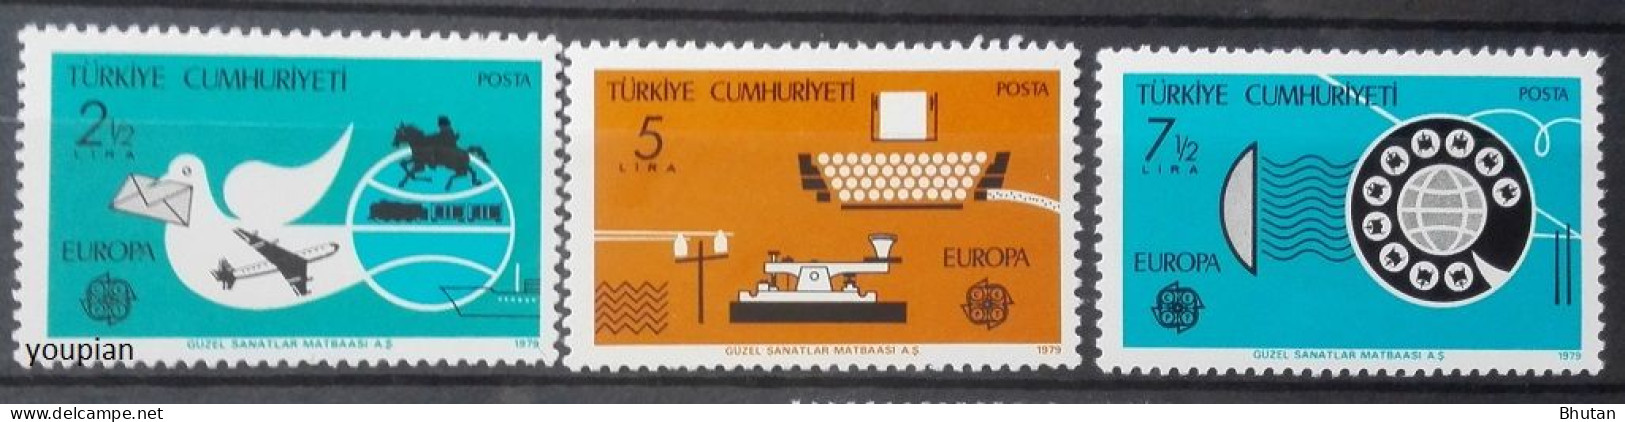 Türkiye 1979, Europa - Postal History, MNH Stamps Set - Nuevos